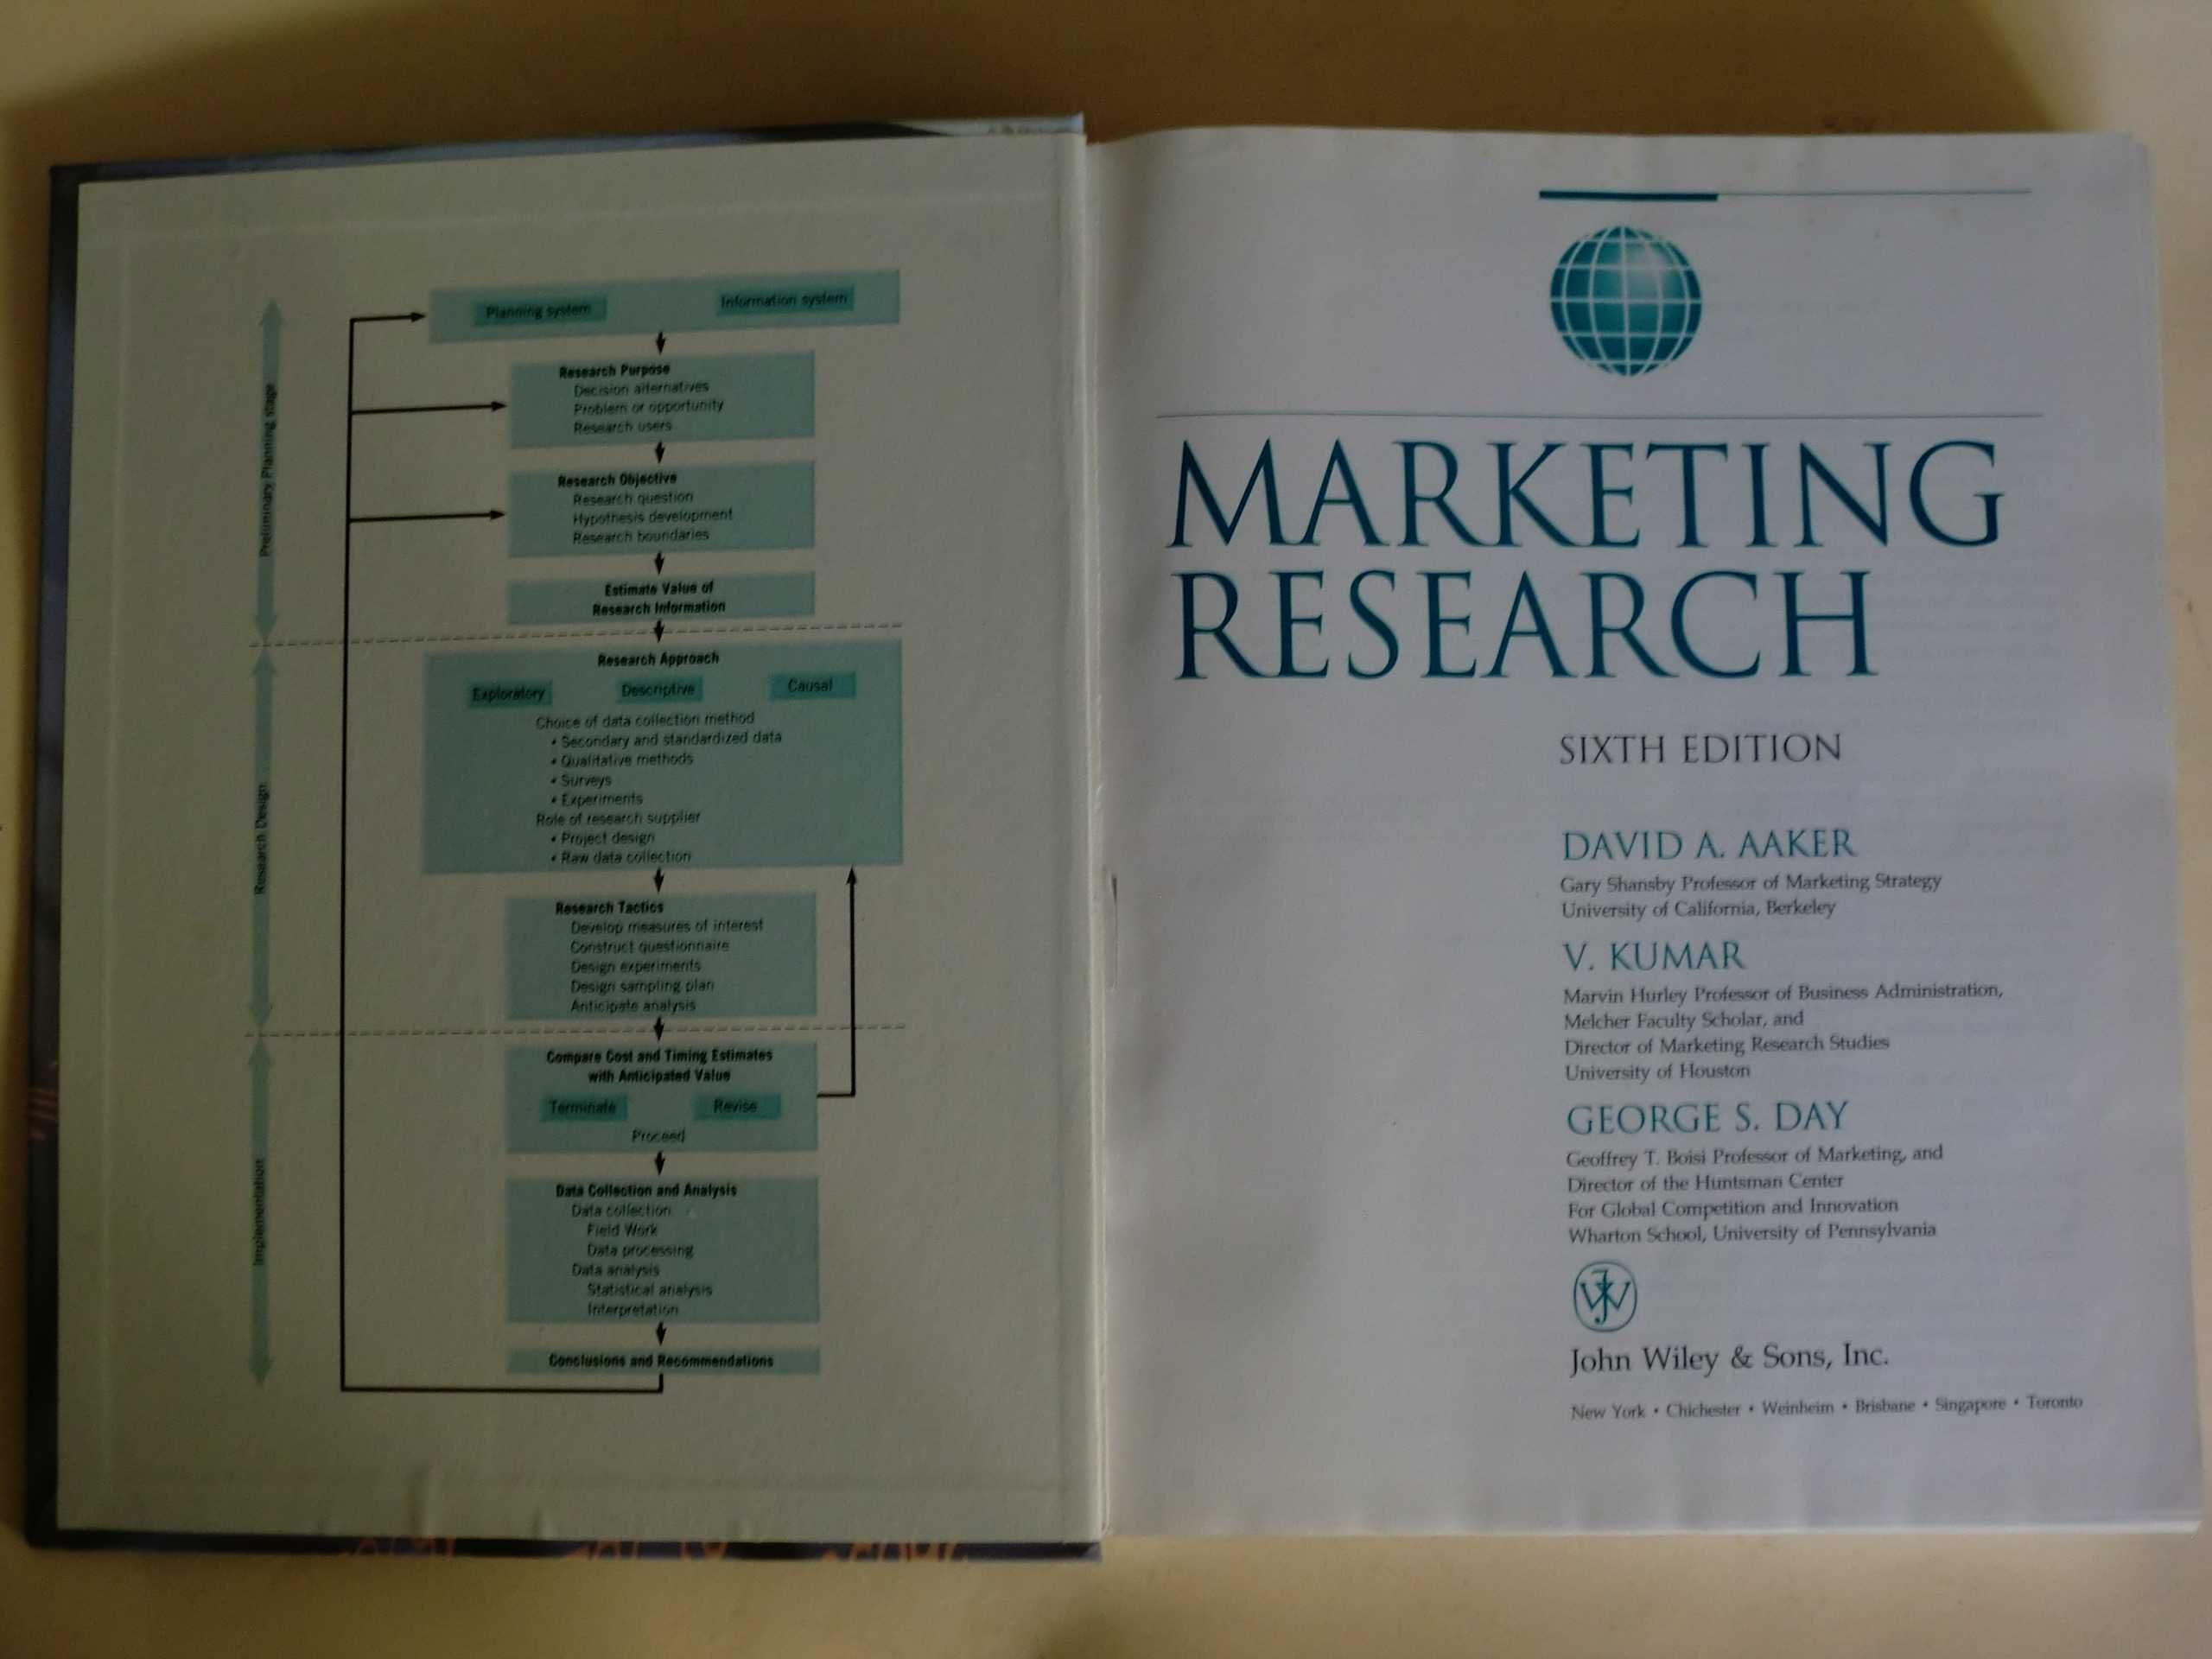 Marketing Research
de David A. Aaker, George S. Day e V. Kumar